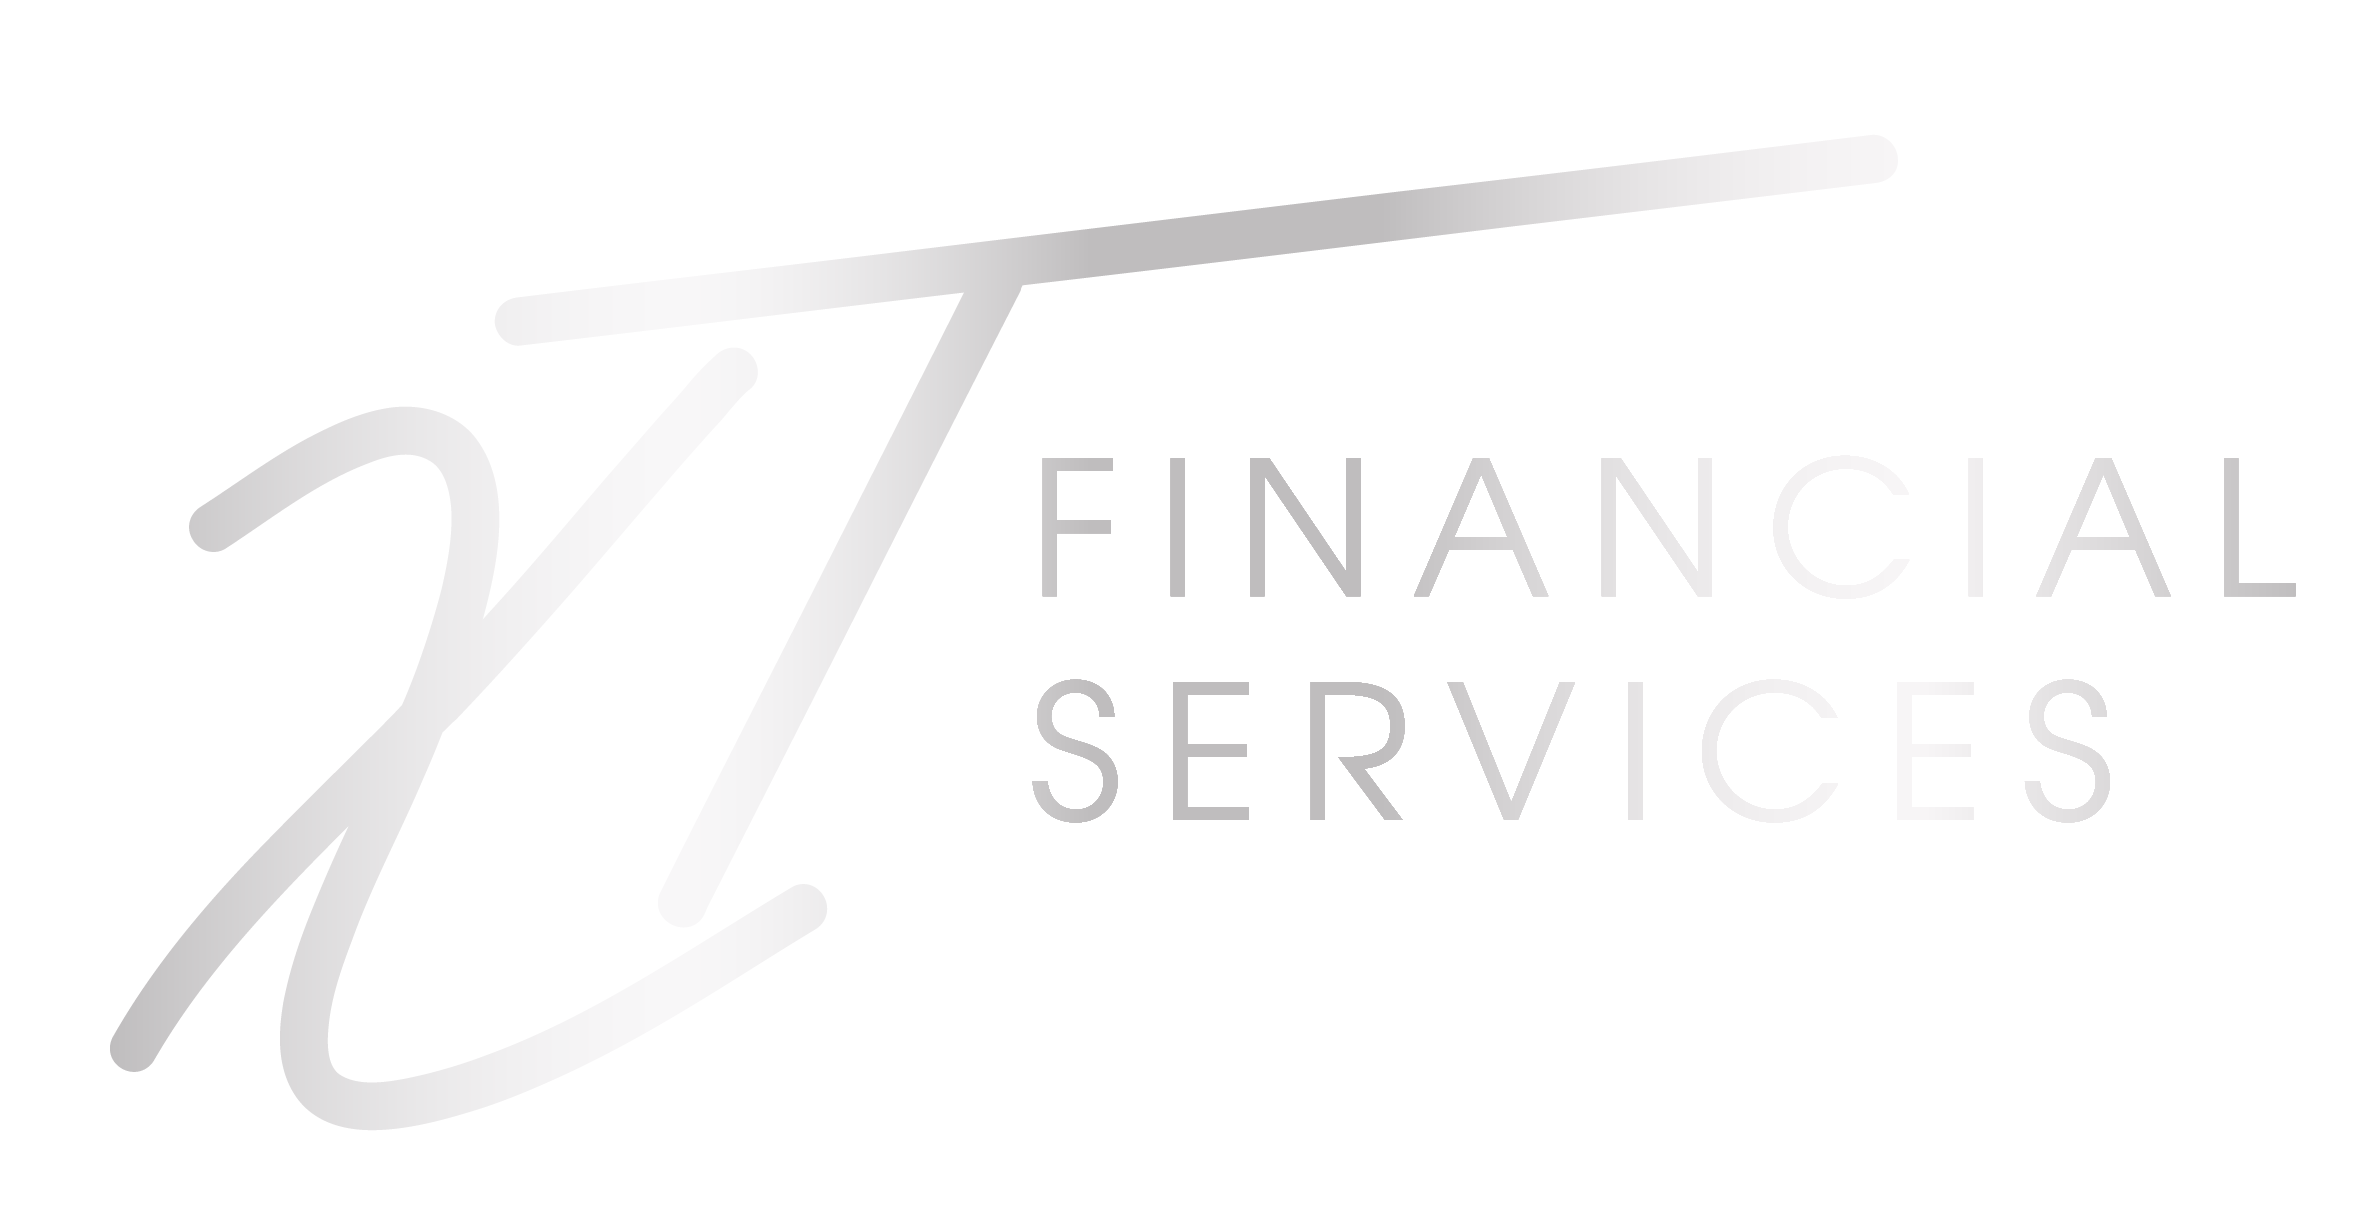 XT Financial Services